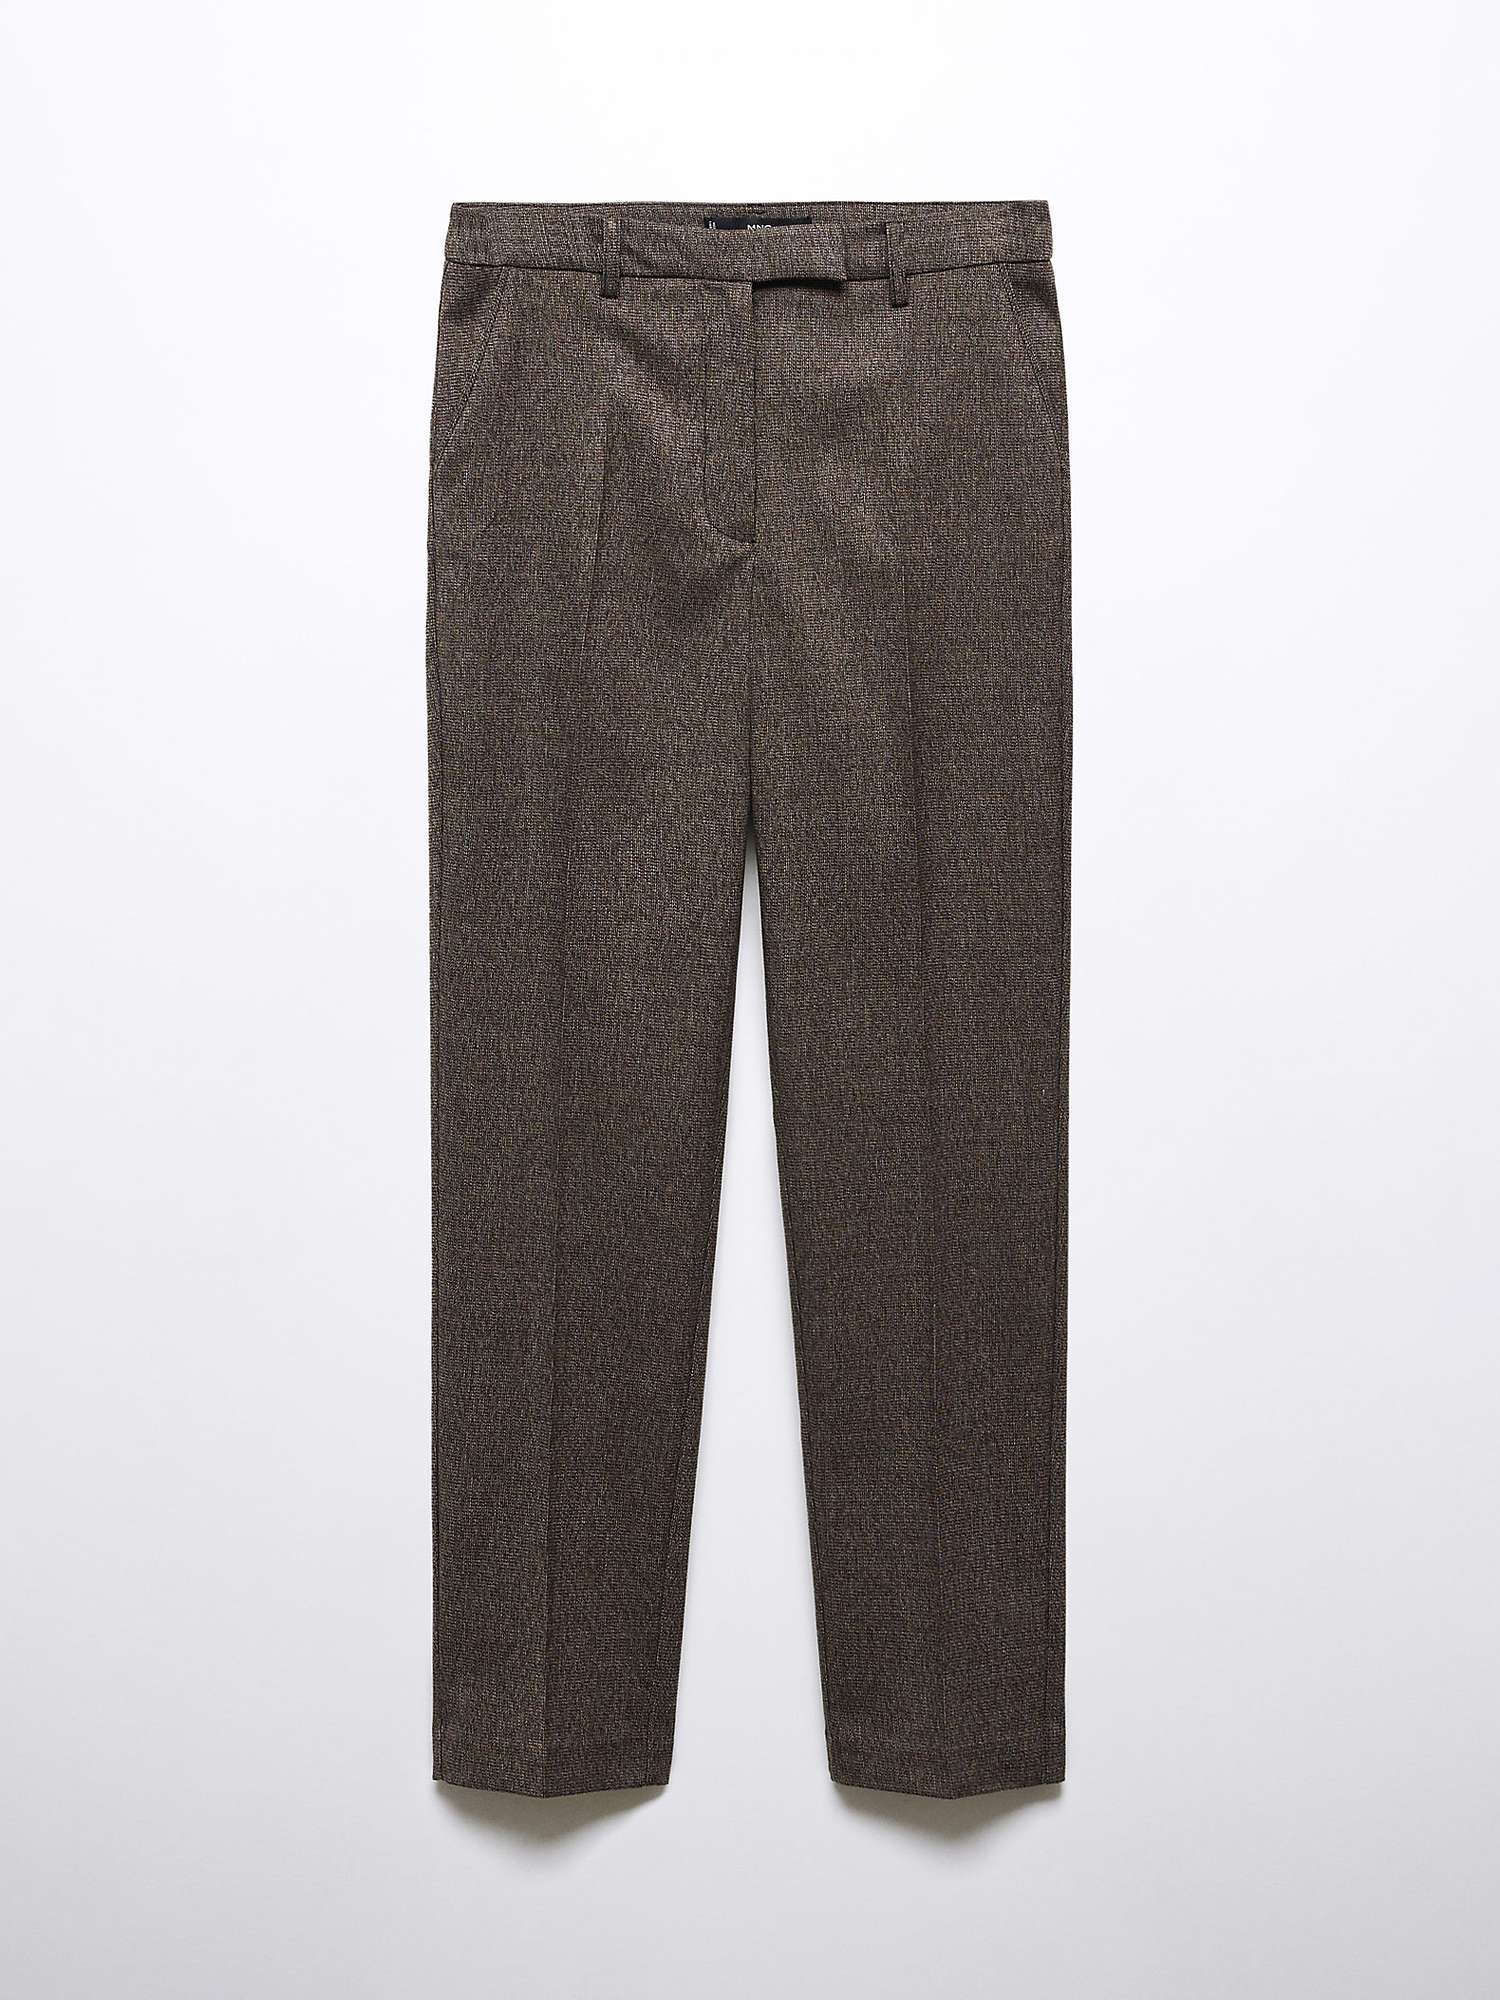 Buy Mango Warm Skinny Suit Trousers, Grey Online at johnlewis.com